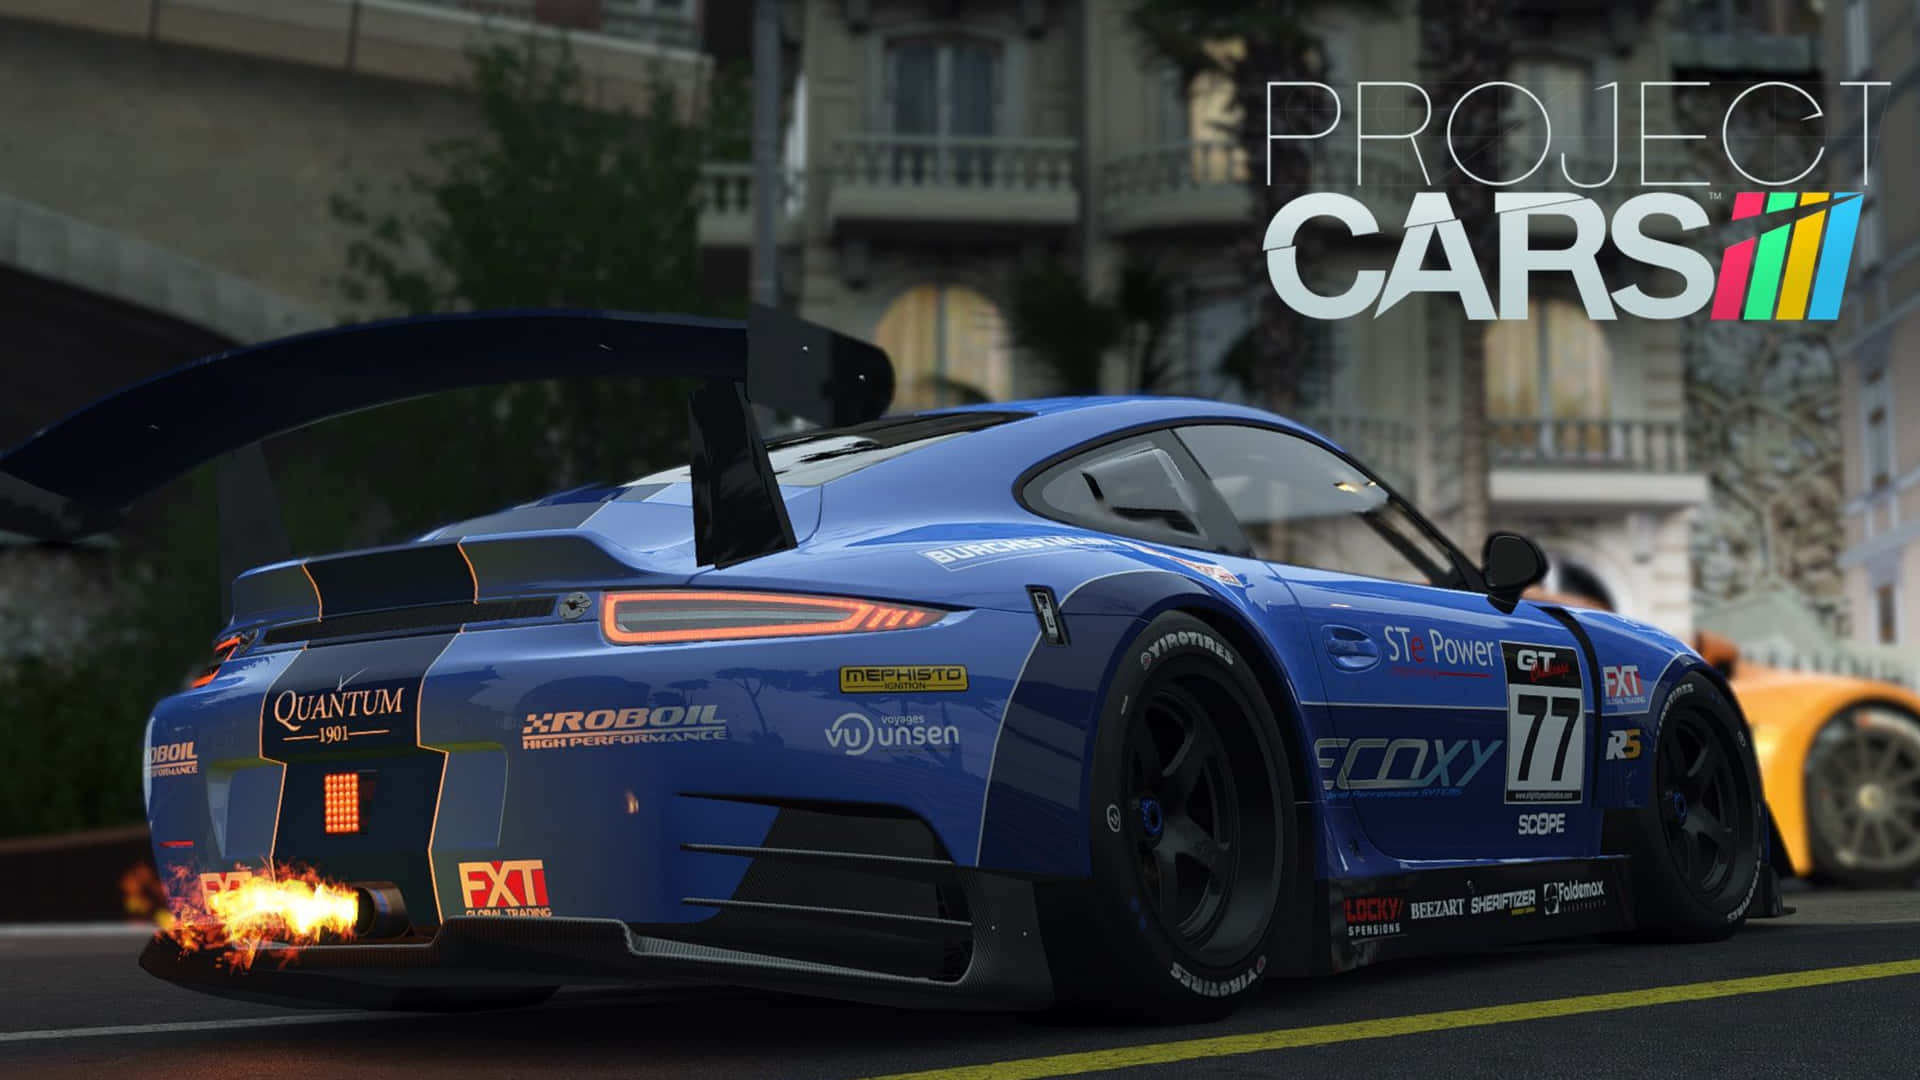 4k Project Cars Game Title Blue Porsche 911 GT3 R Background